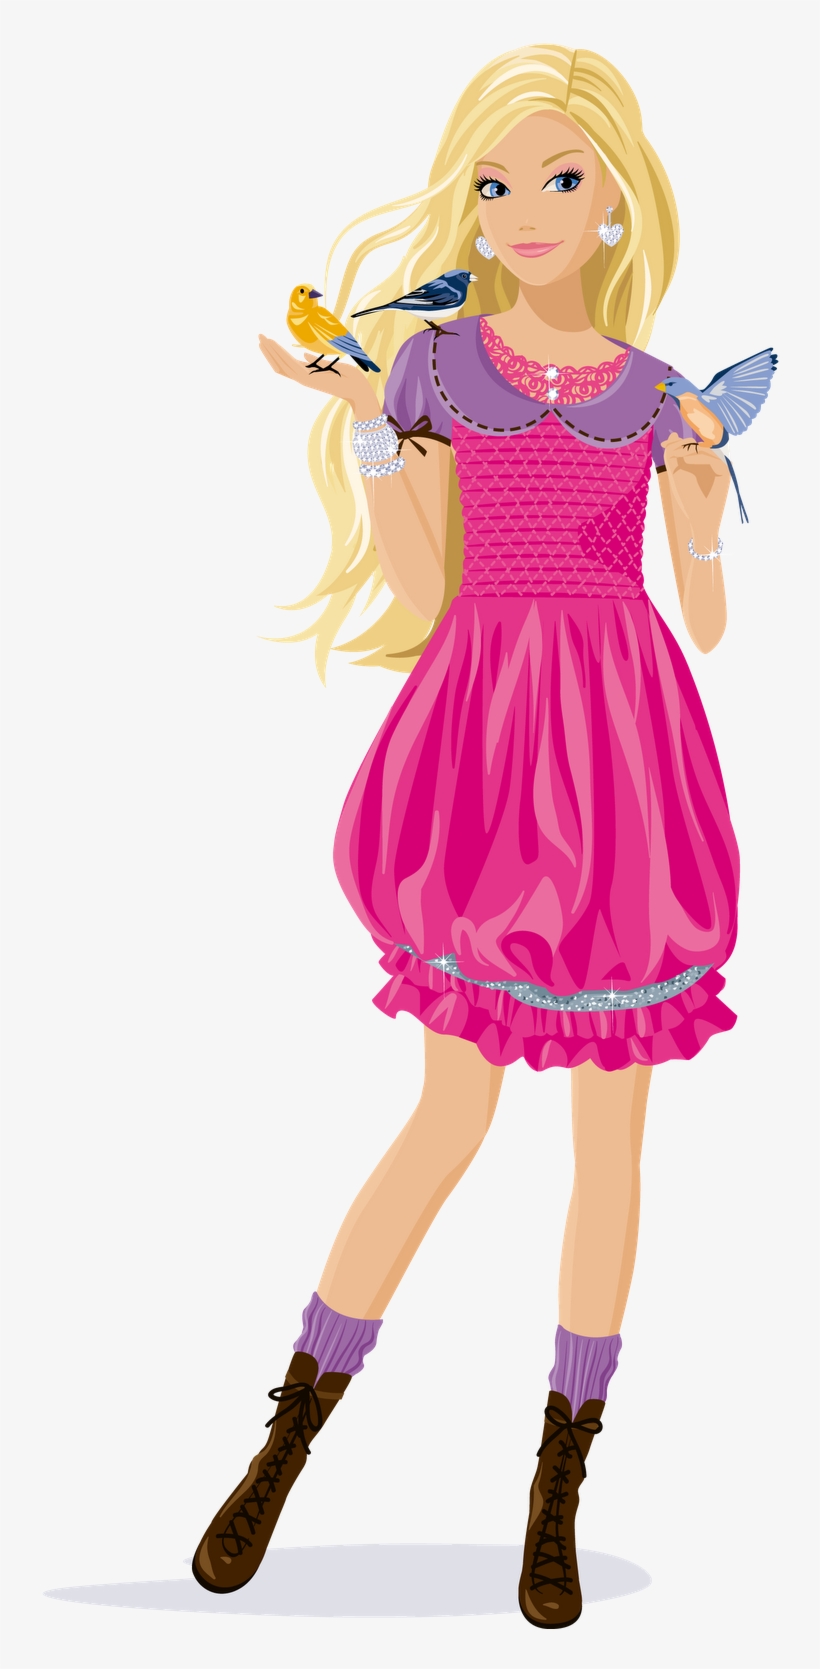 Barbie Png Images Free Download Barbie Doll Vector - Barbie Png, transparent png #1758828